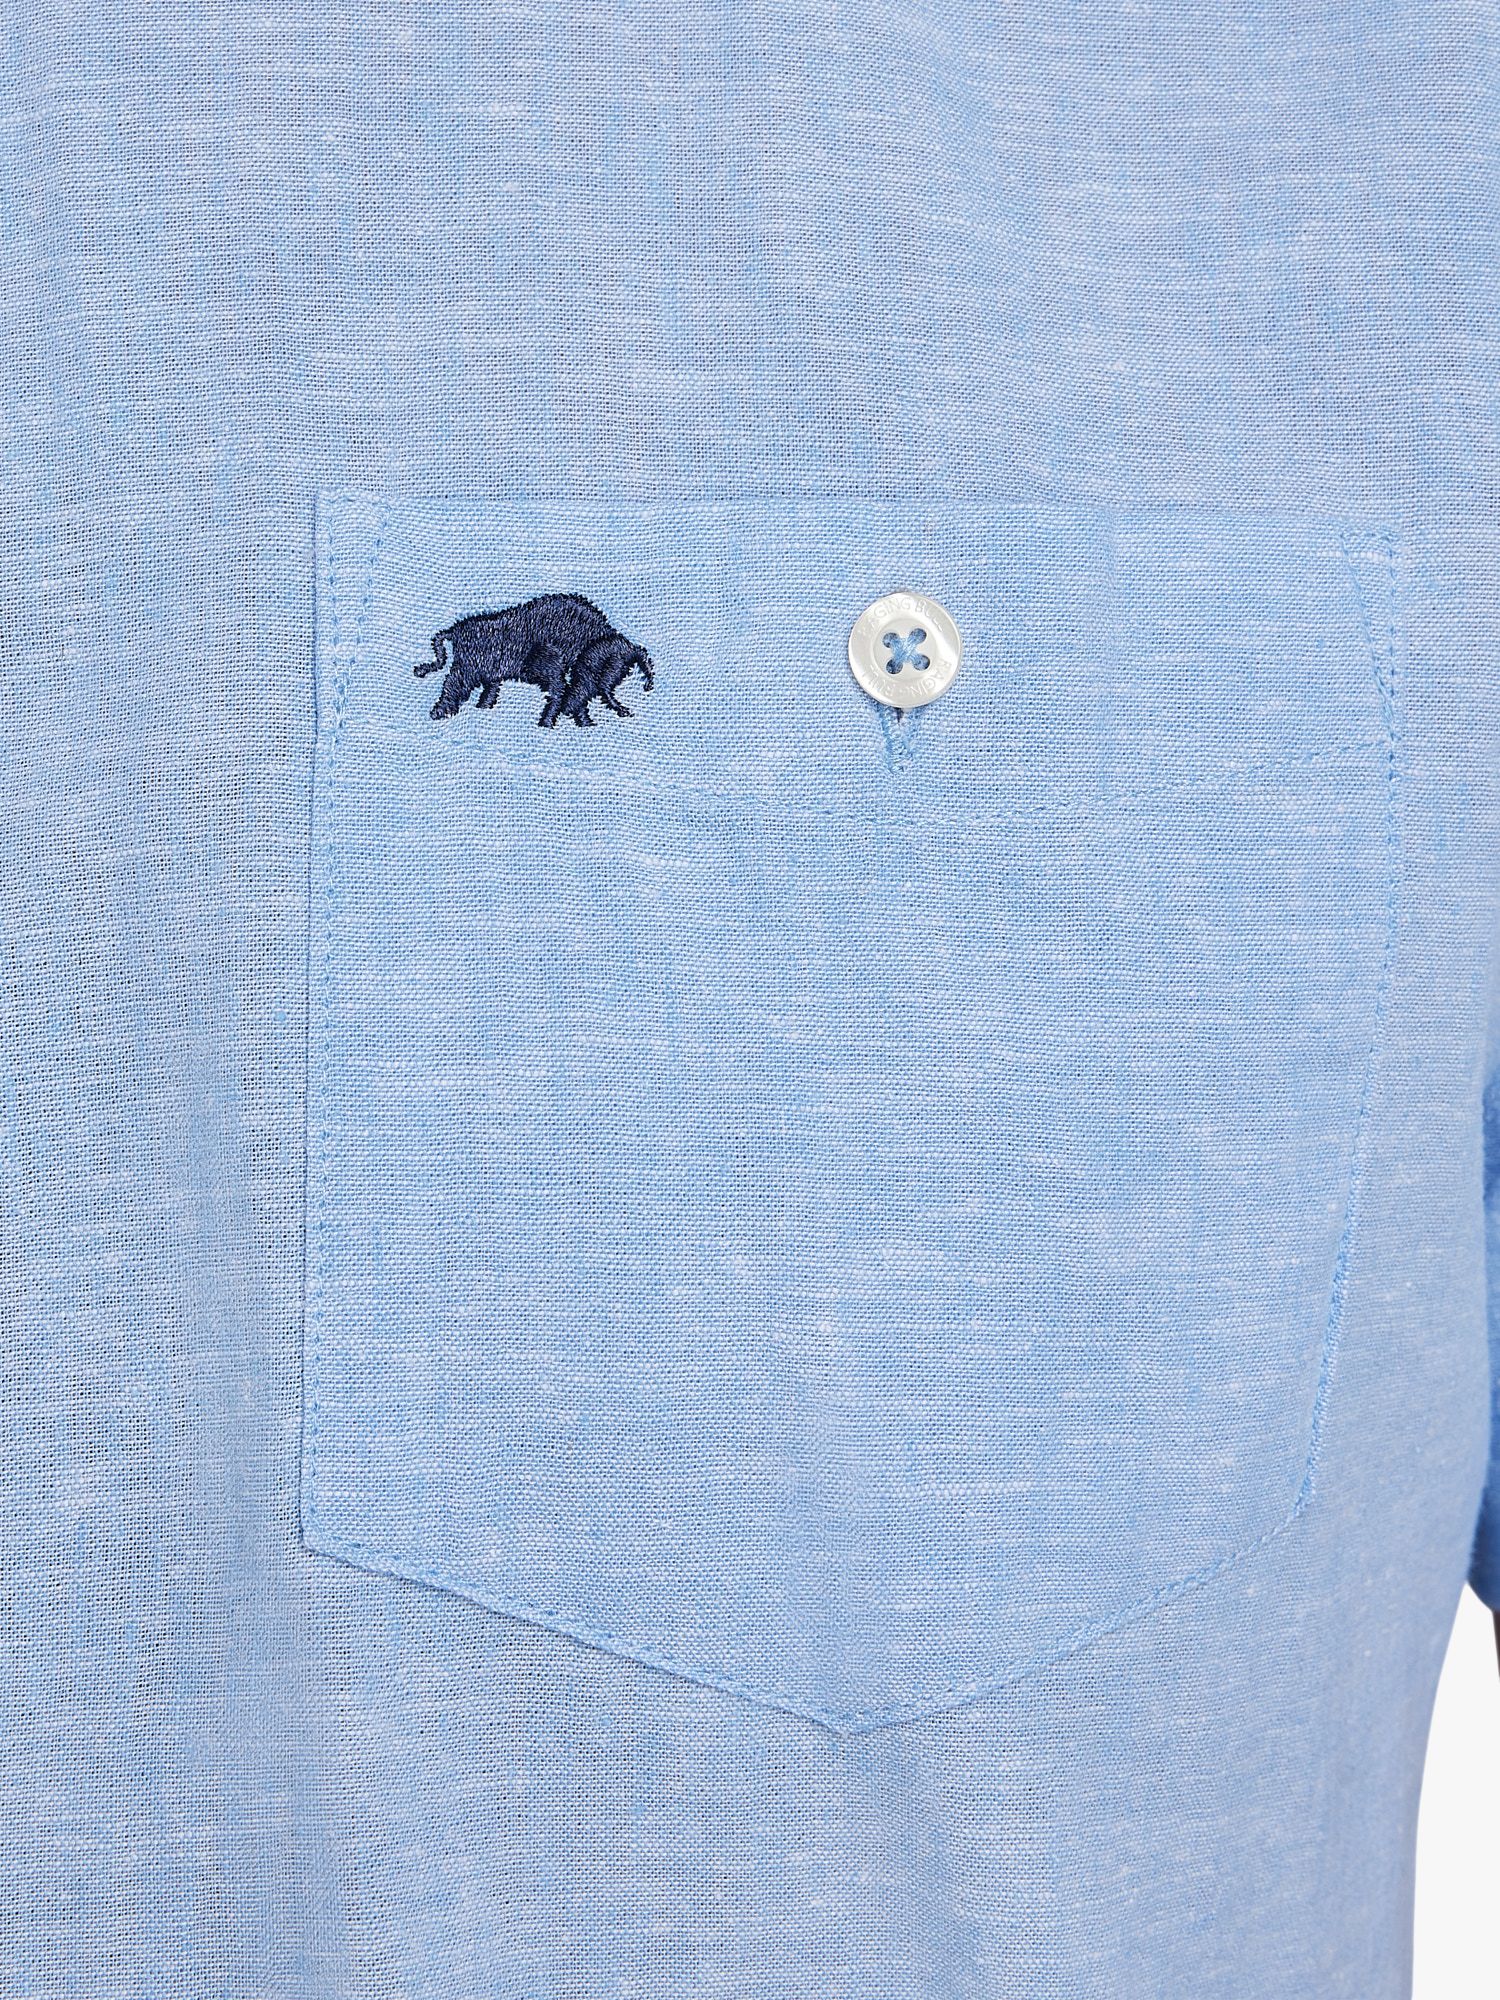 Raging Bull Classic Linen Short Sleeve Shirt, Blue, L